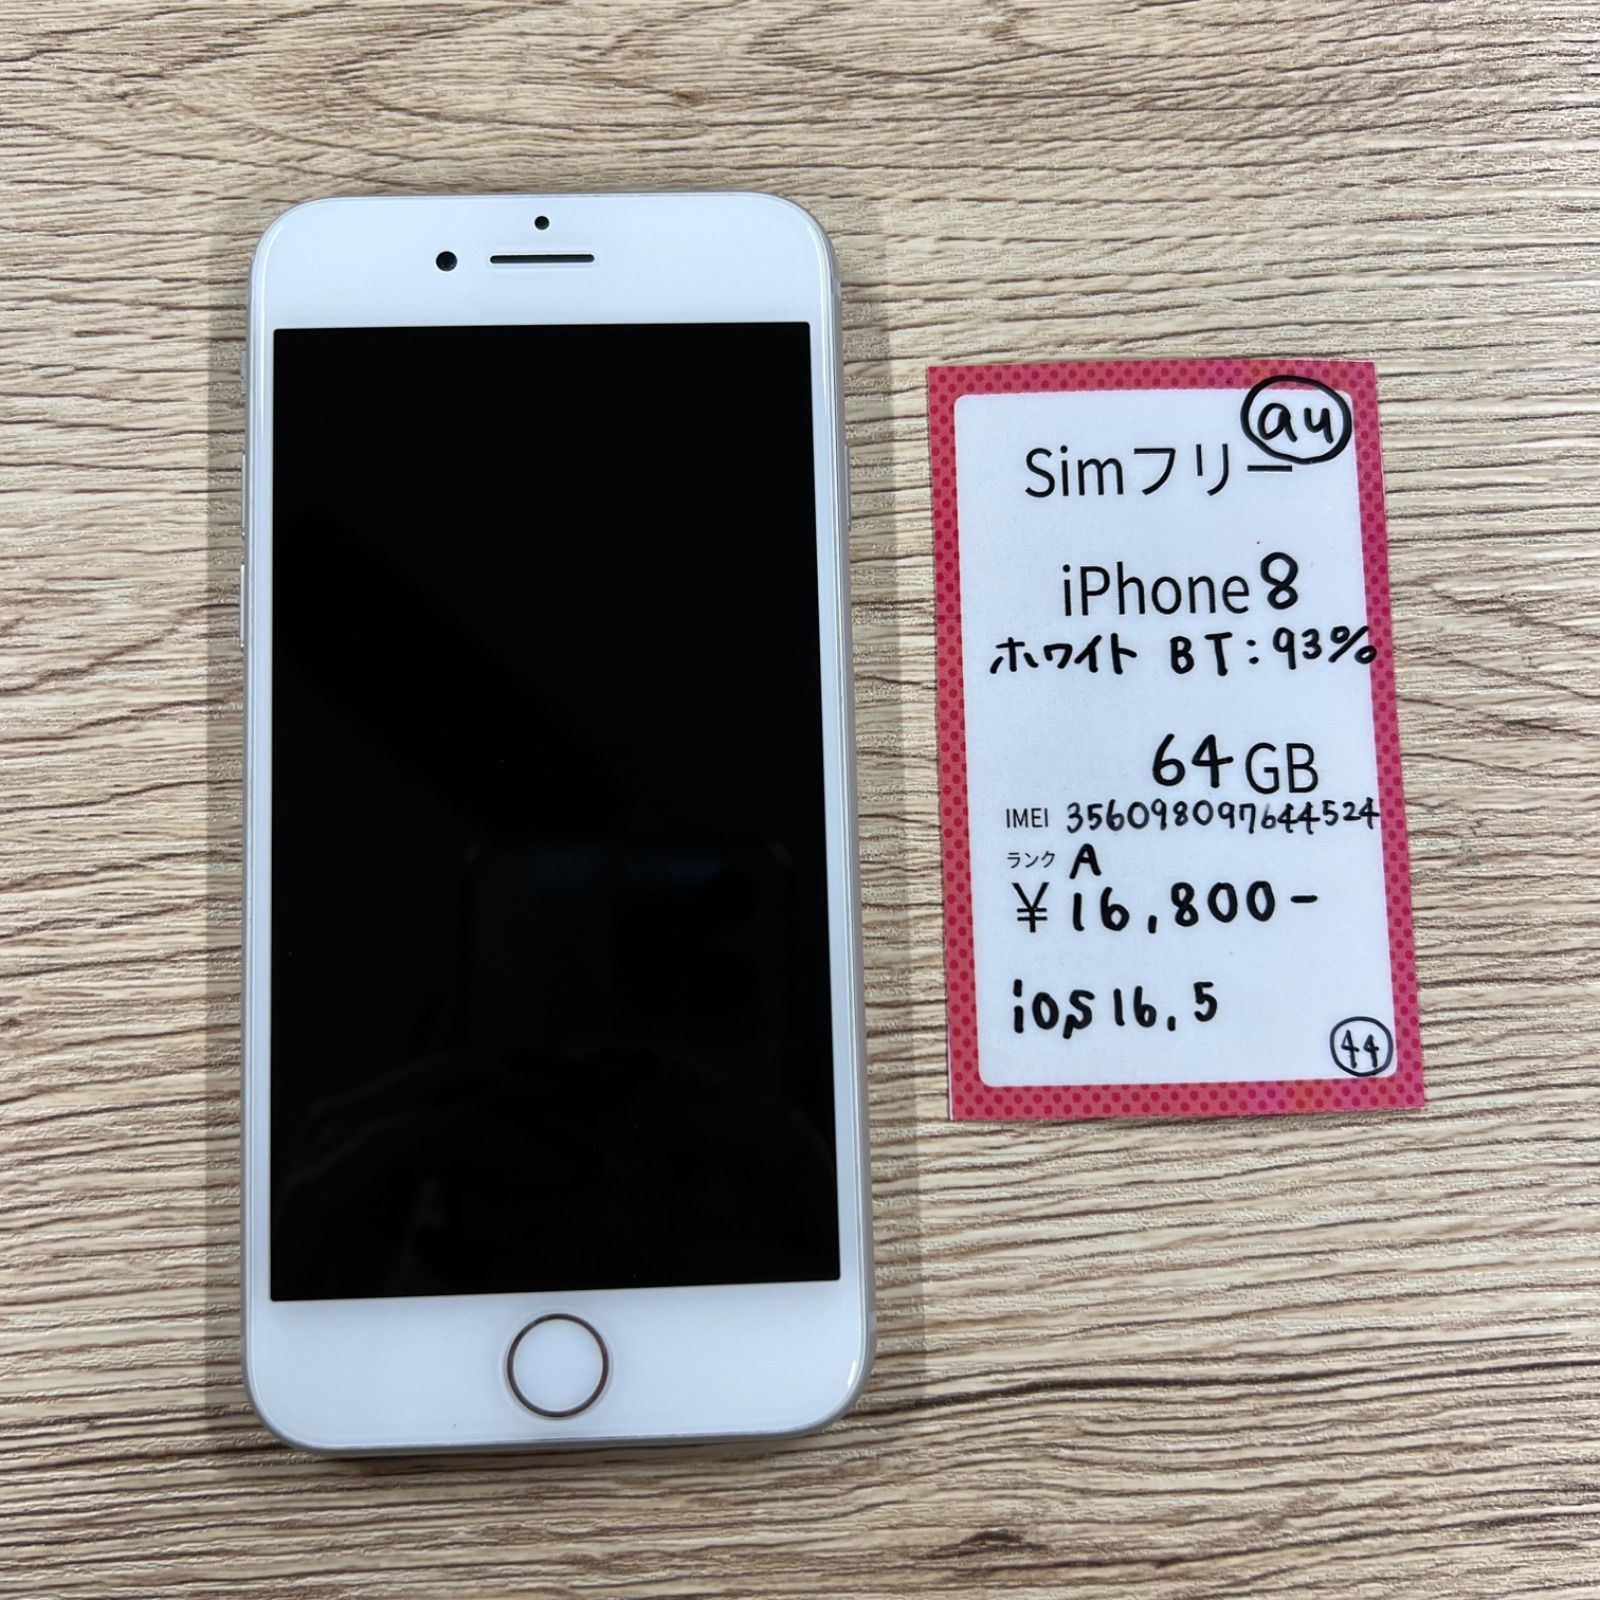 simフリー iPhone 8 ホワイト64 GB 本体 - メルカリ